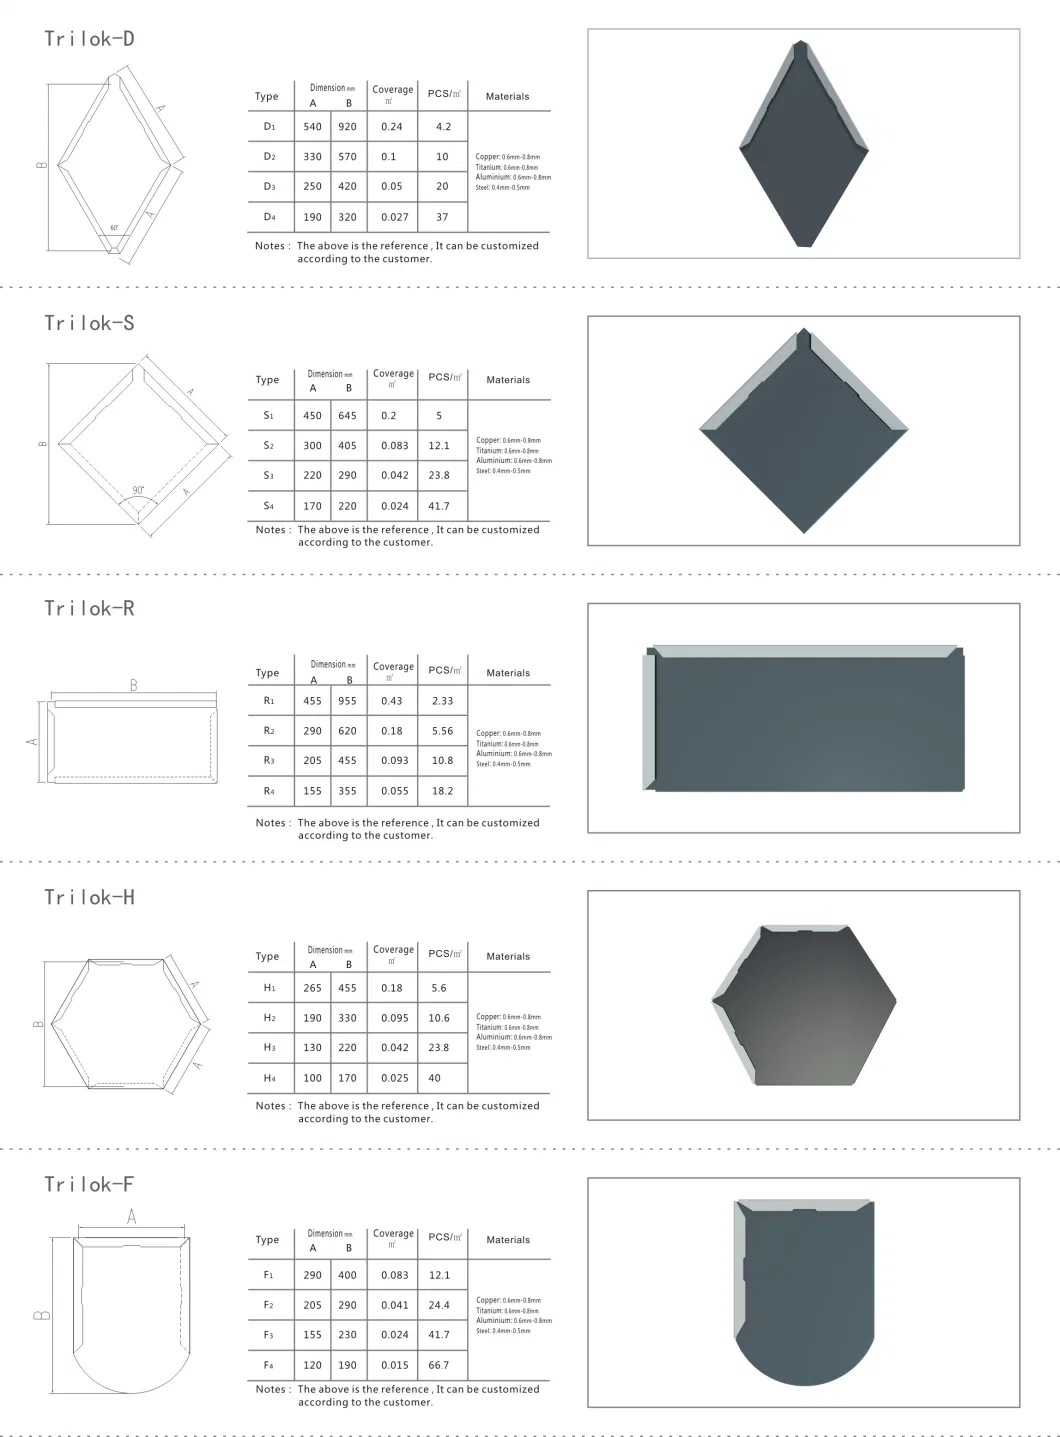 Trilok Metal Interlocking Roofing Sheet, Roofing Panel, Wall Panel, Wall Shingle Trilok-F2